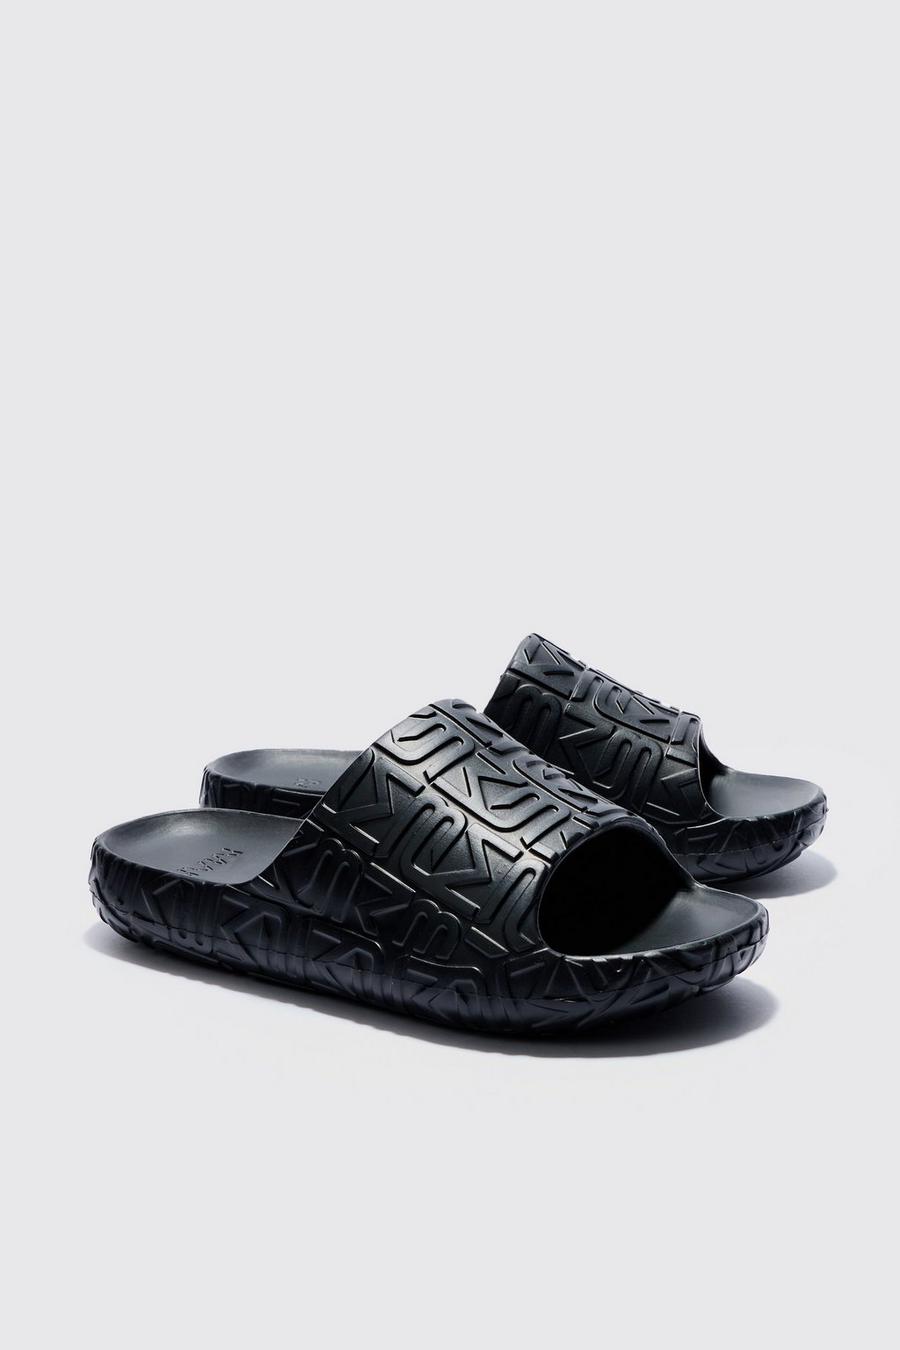 Black adidas primeknit shoes